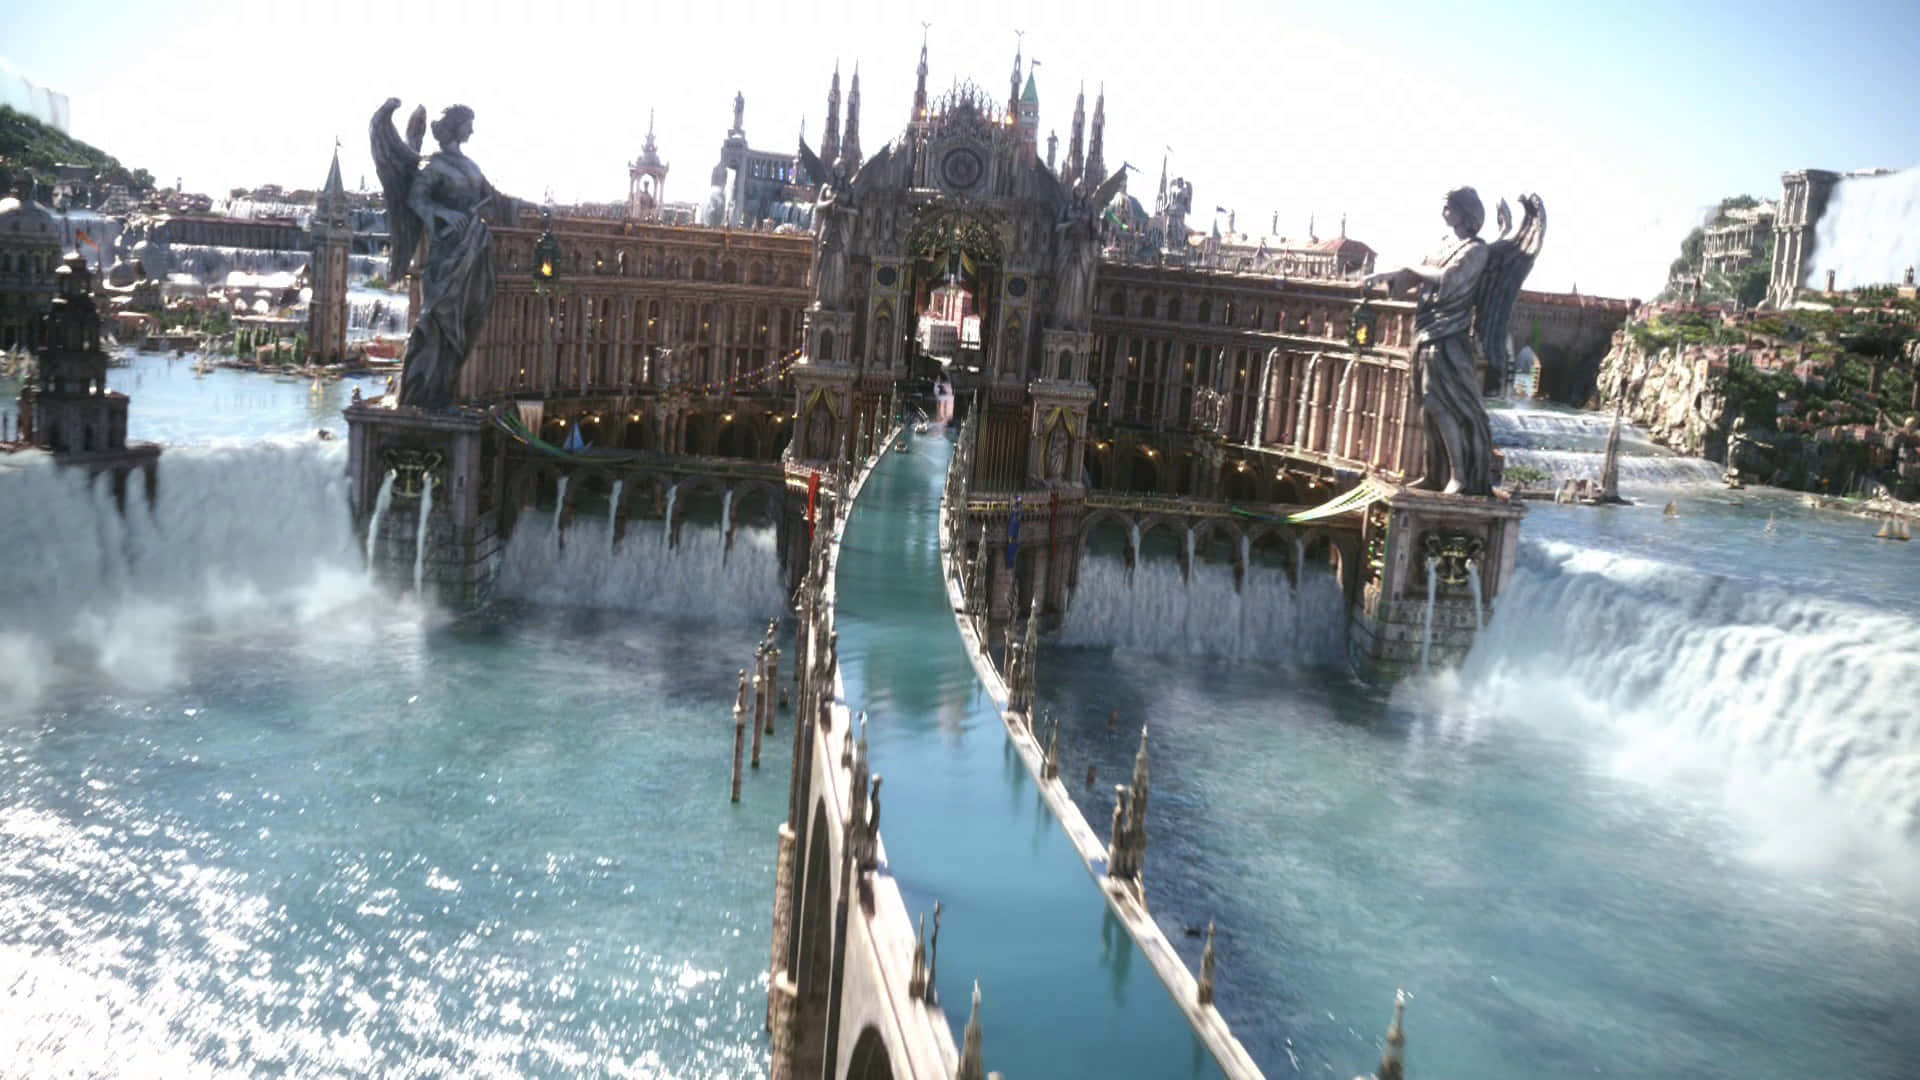 Levillealtissia City Final Fantasy Xv Bakgrund.